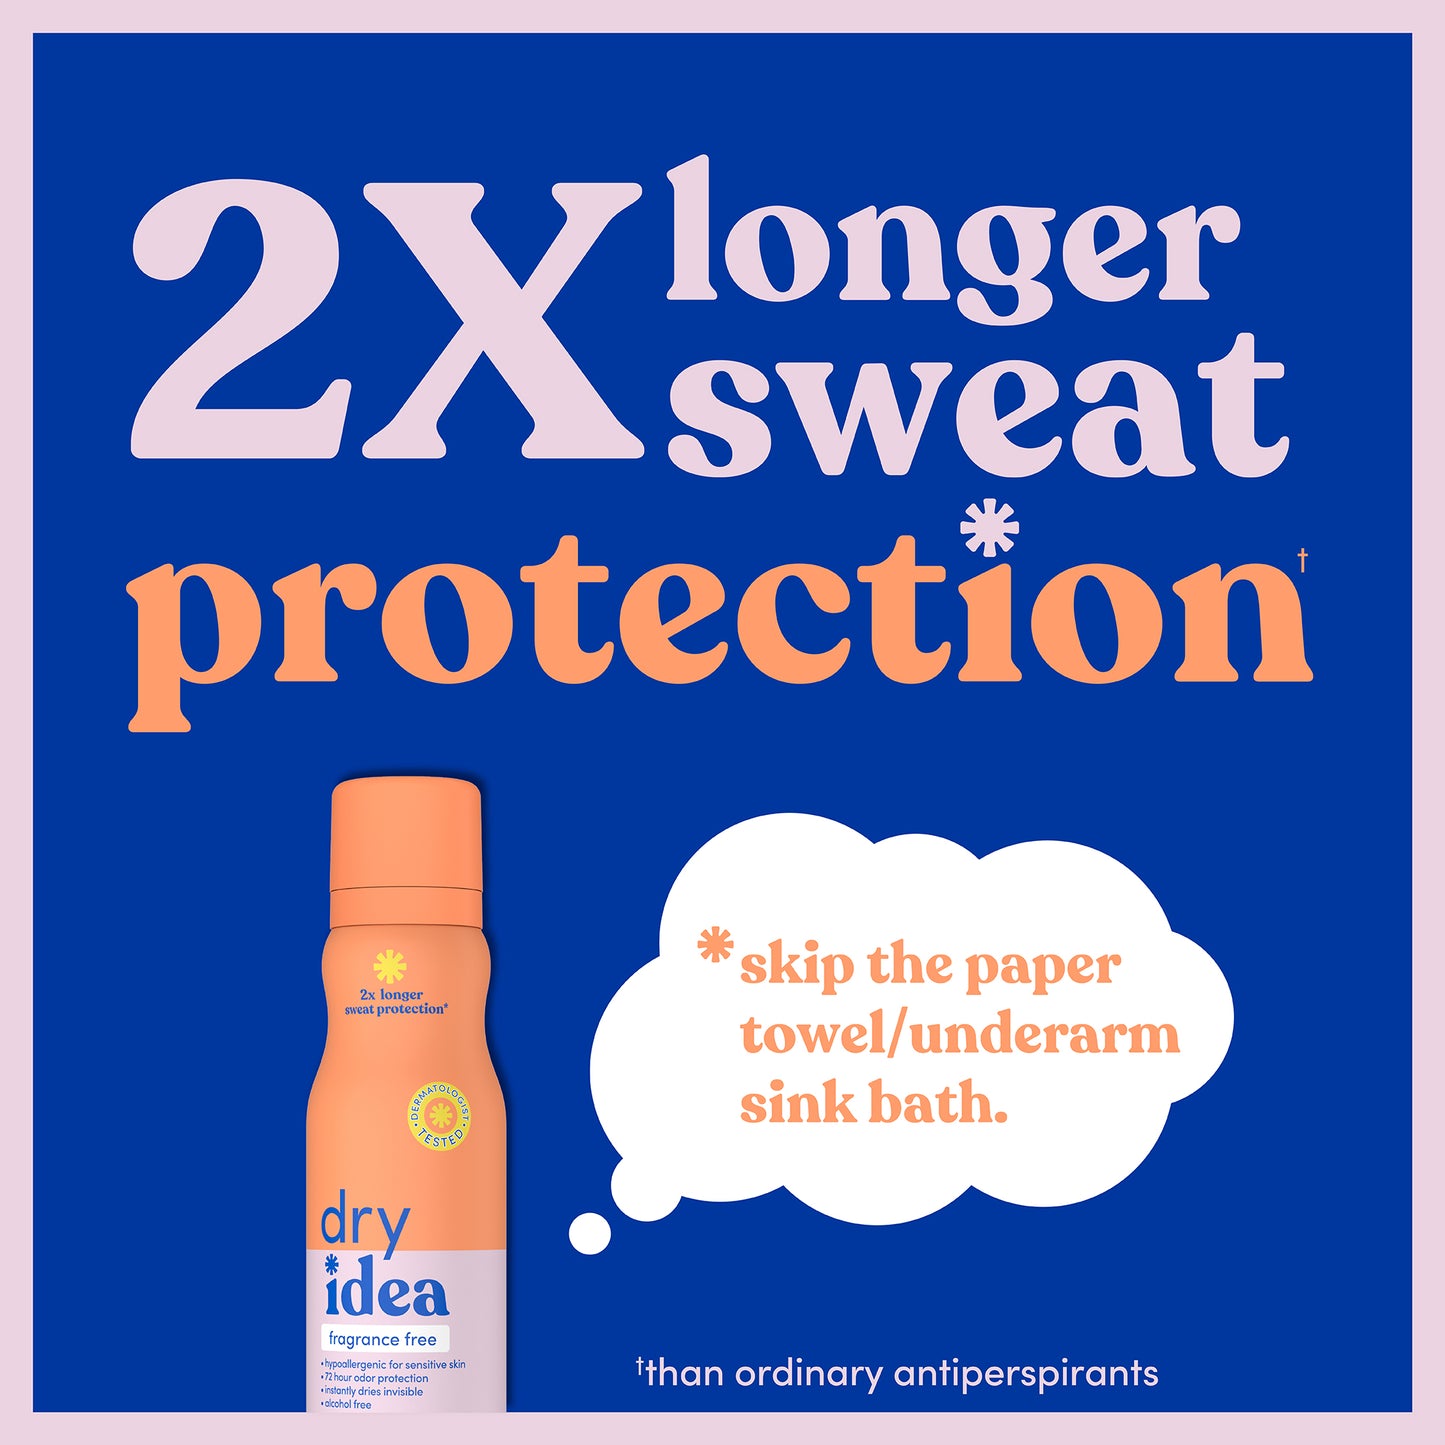 2X longer sweat protection